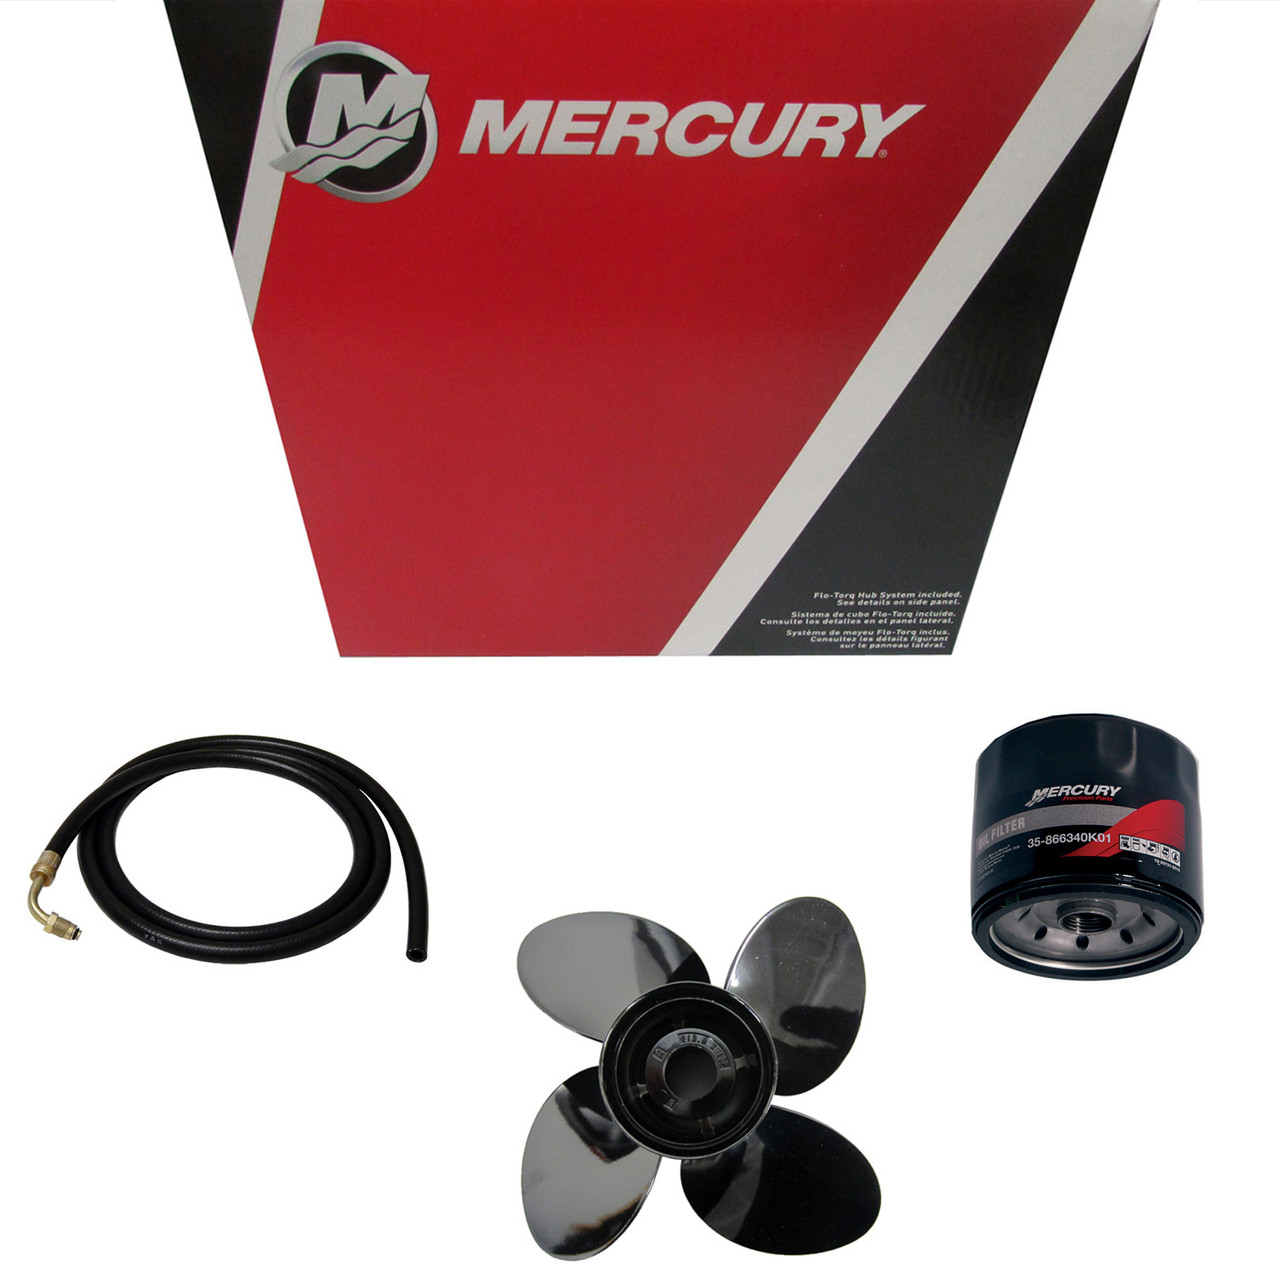 Mercury Marine / Mercruiser New OEM Prop 17.75L37 21D, 48-8M0017133